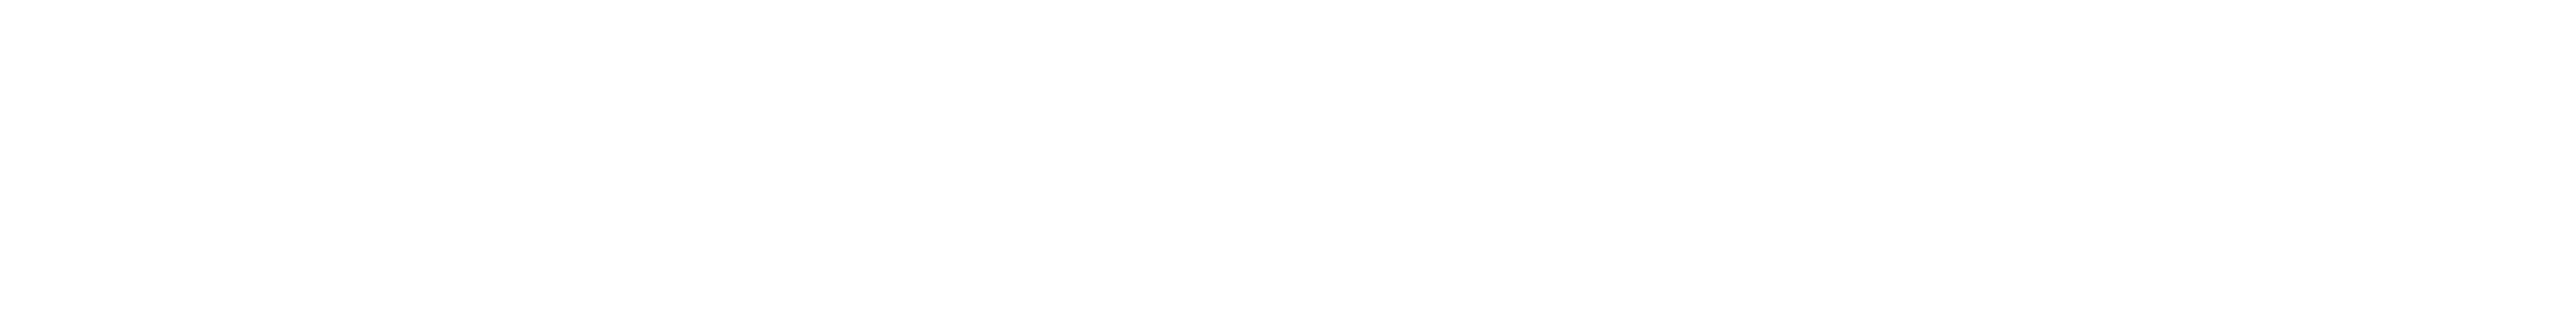 Sozap logo large for dark backgrounds (transparent PNG)